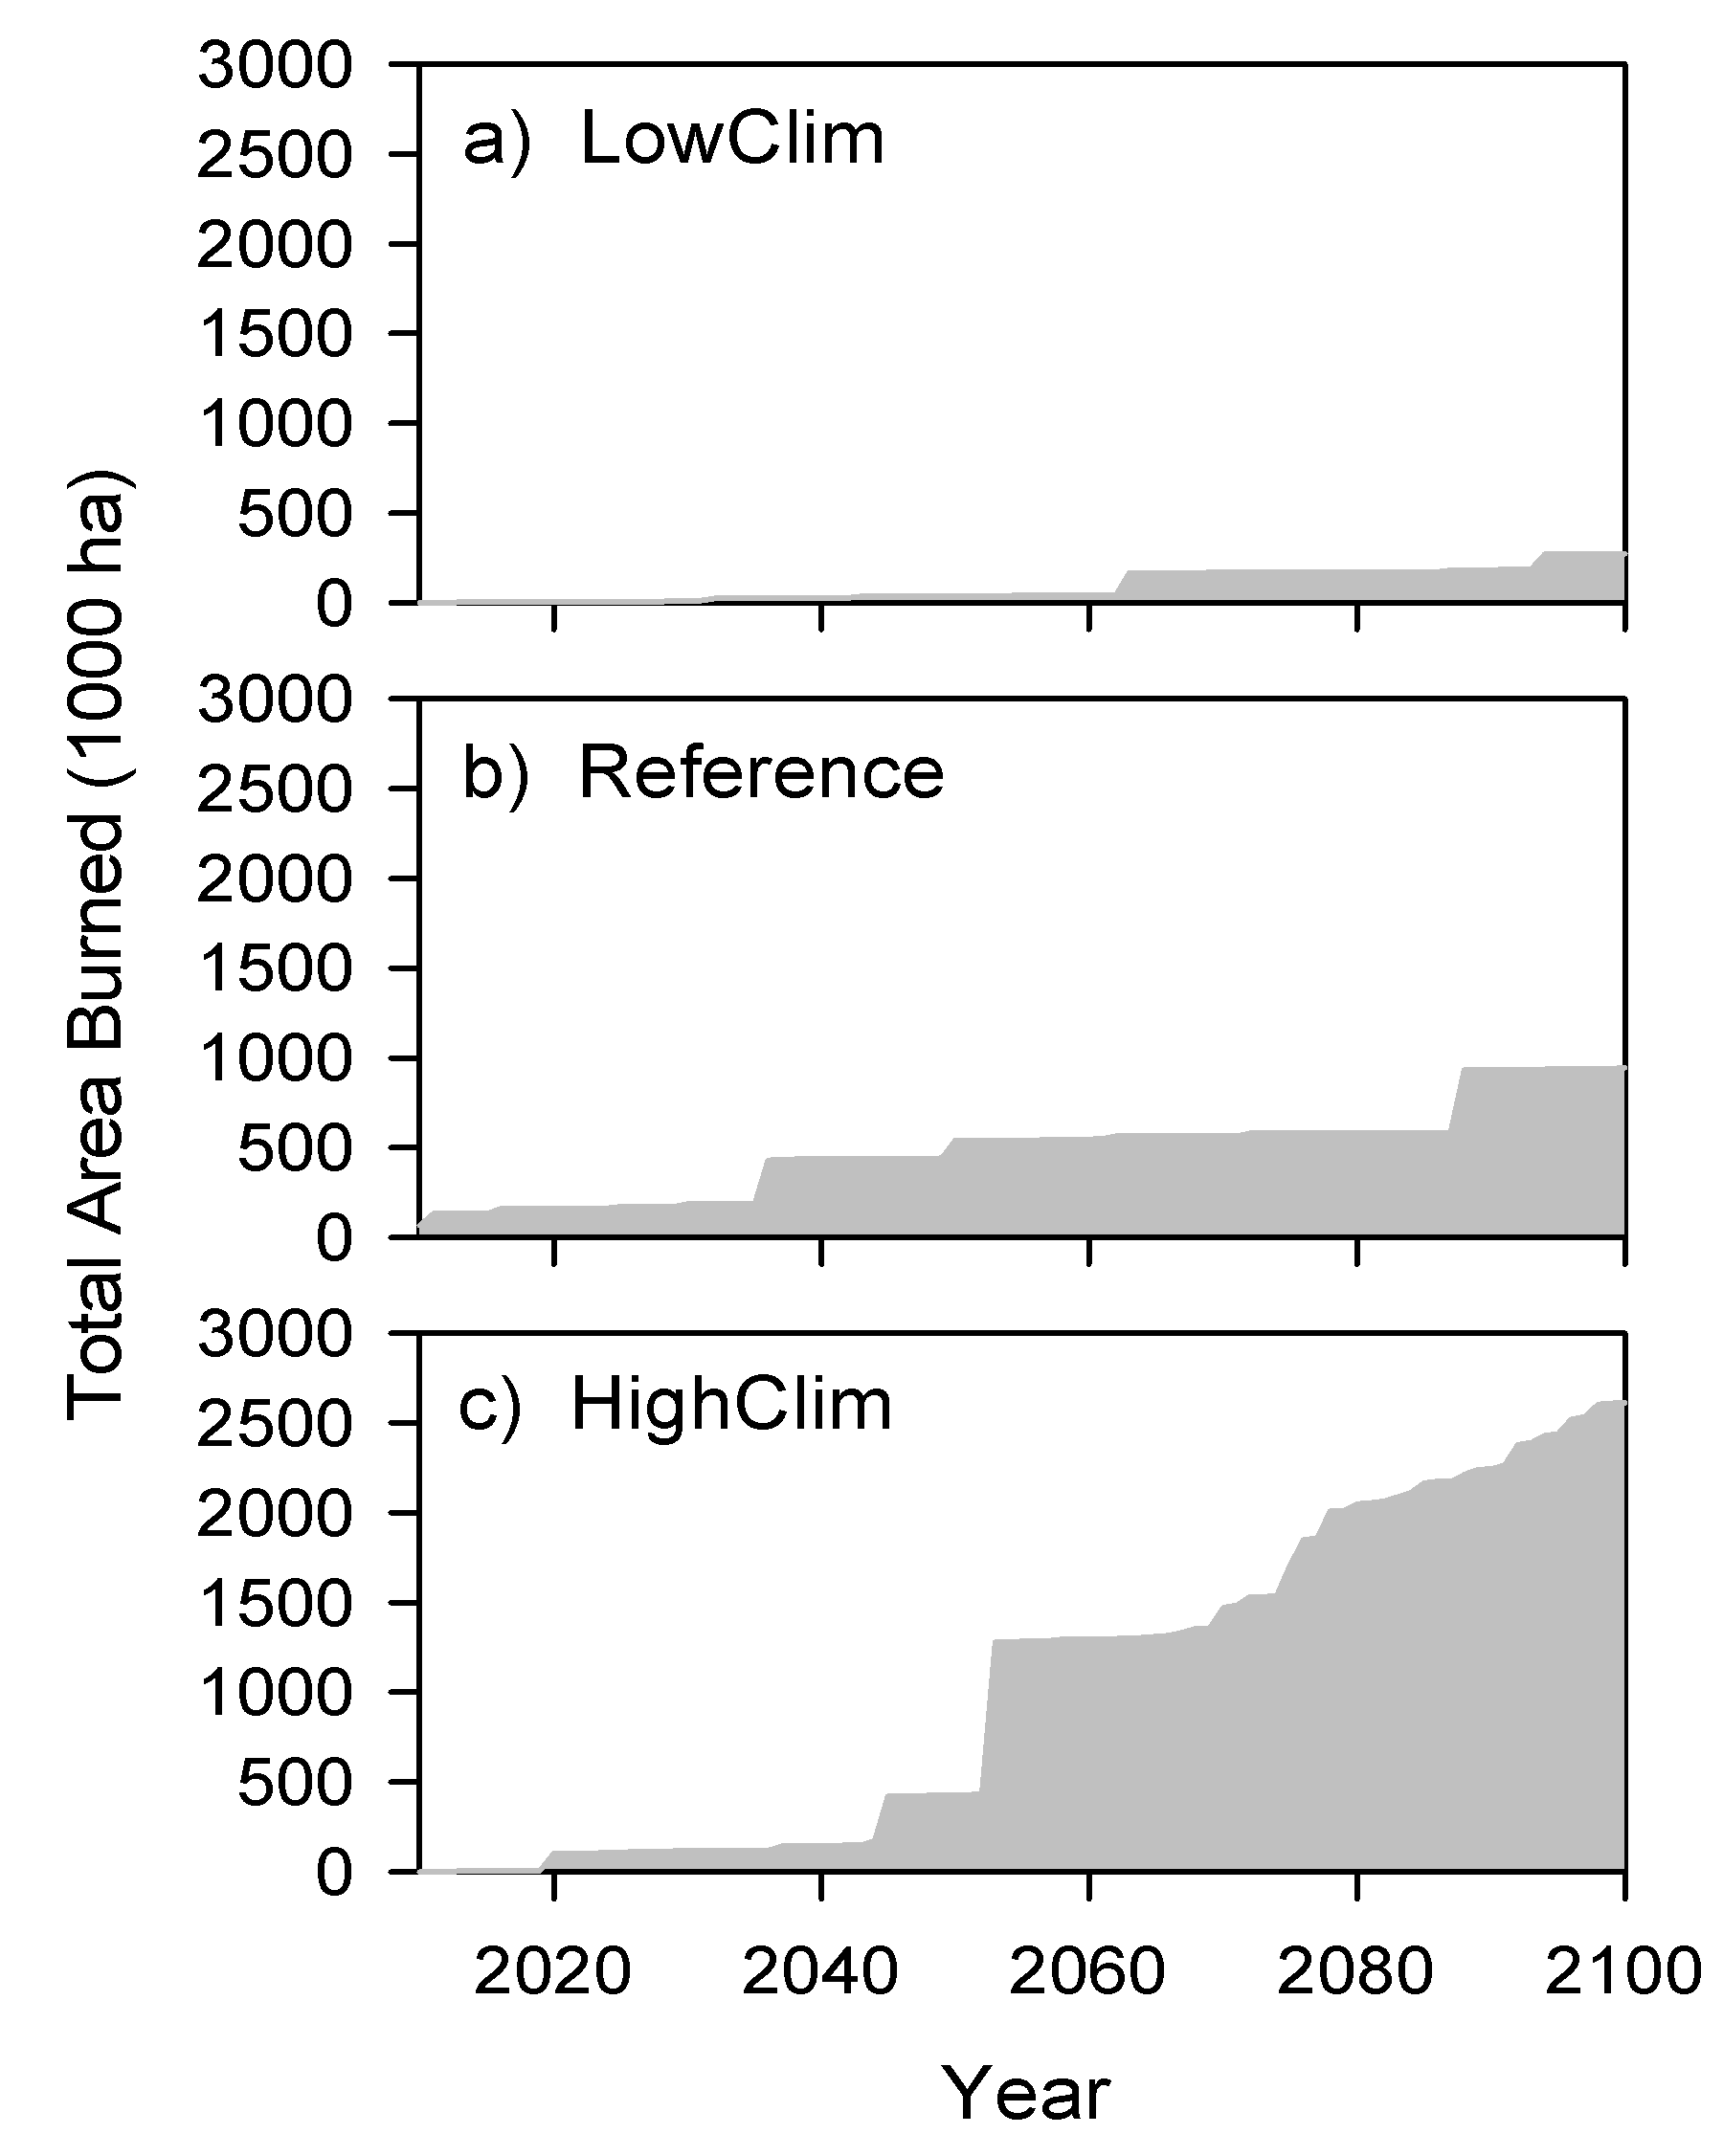 Figure 2. Area burned per year in the three climate scenarios.